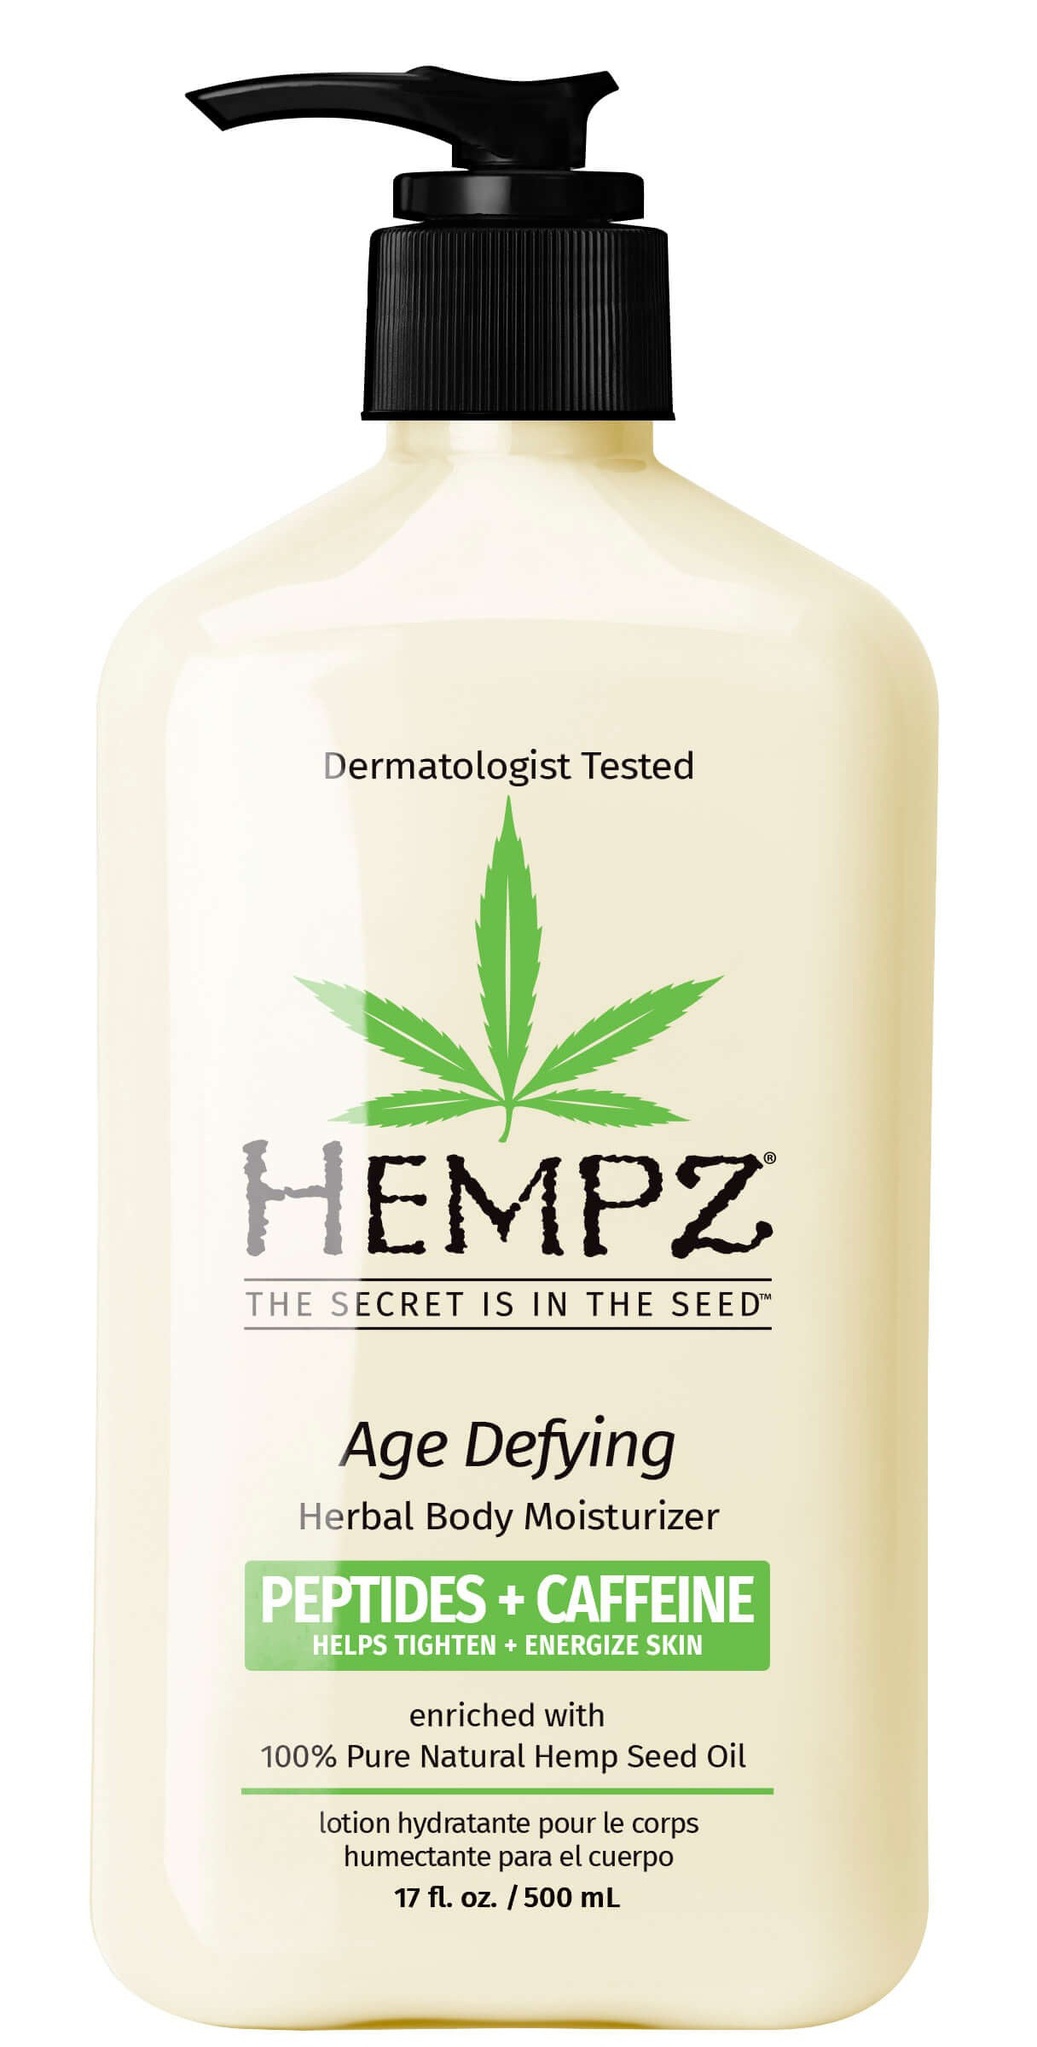 Hempz Age Defying Herbal Body Moisturizer, Peptides + Caffine